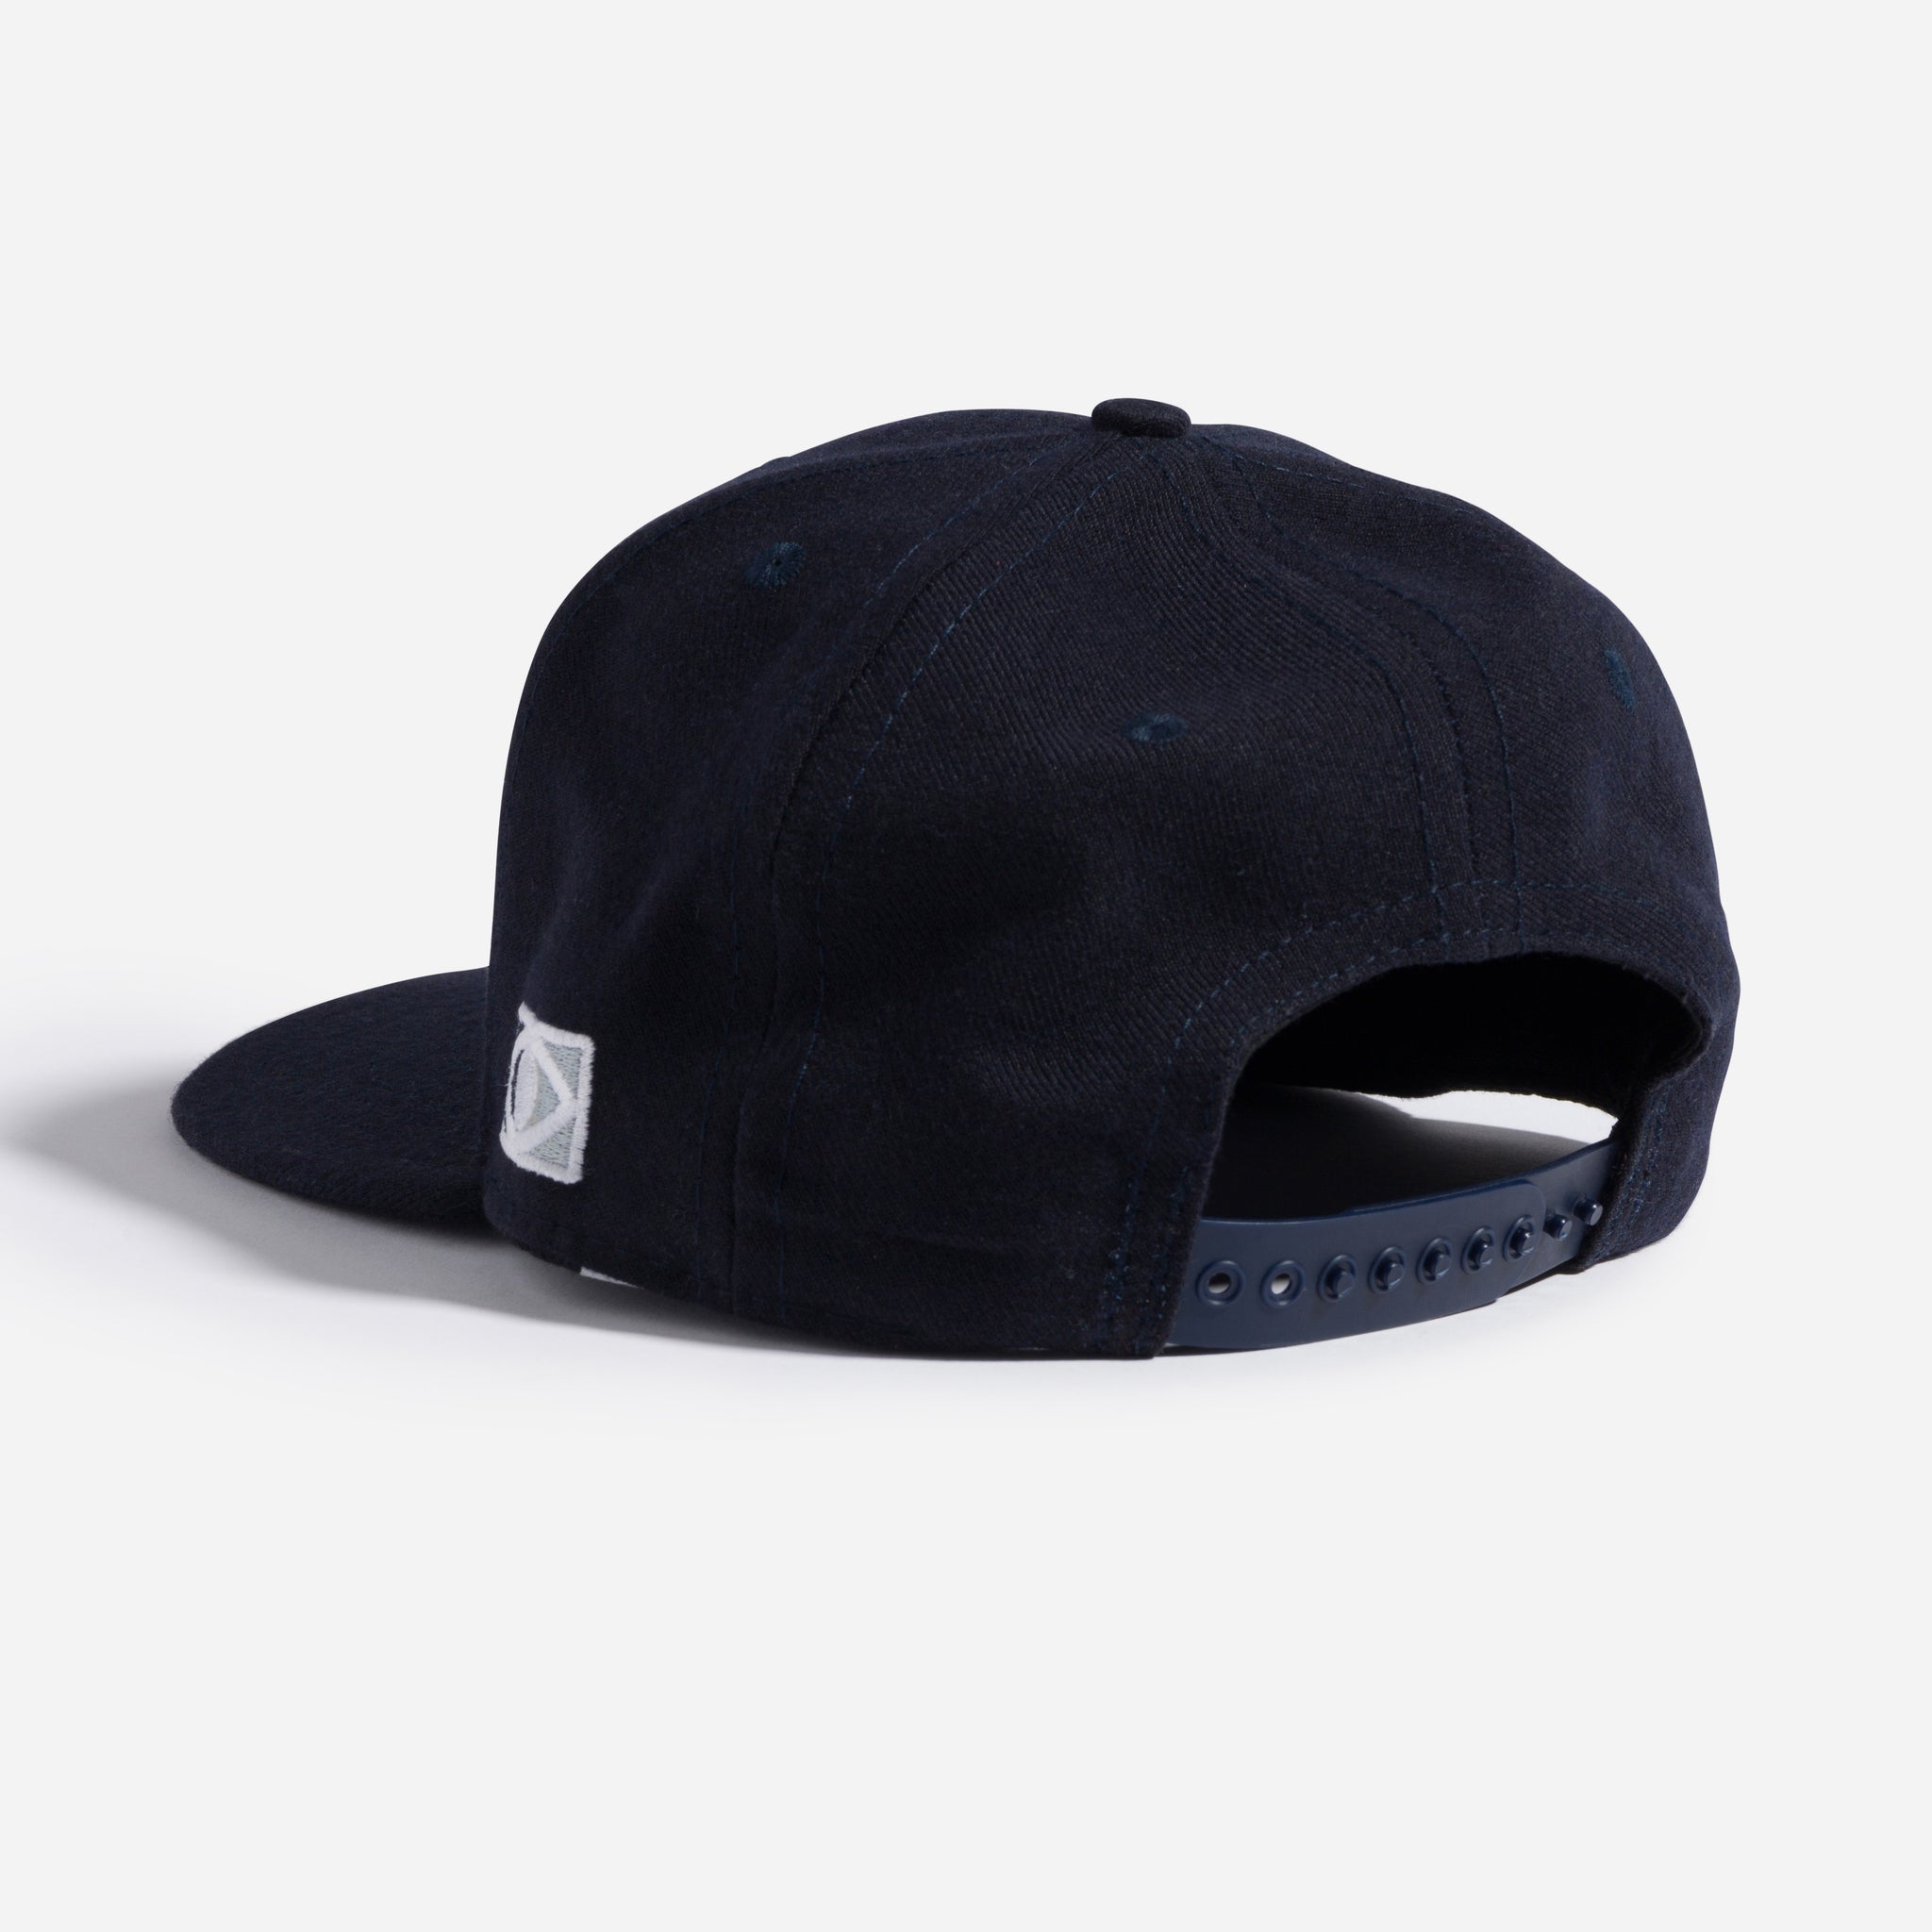 HNL Bows Snapback Hat